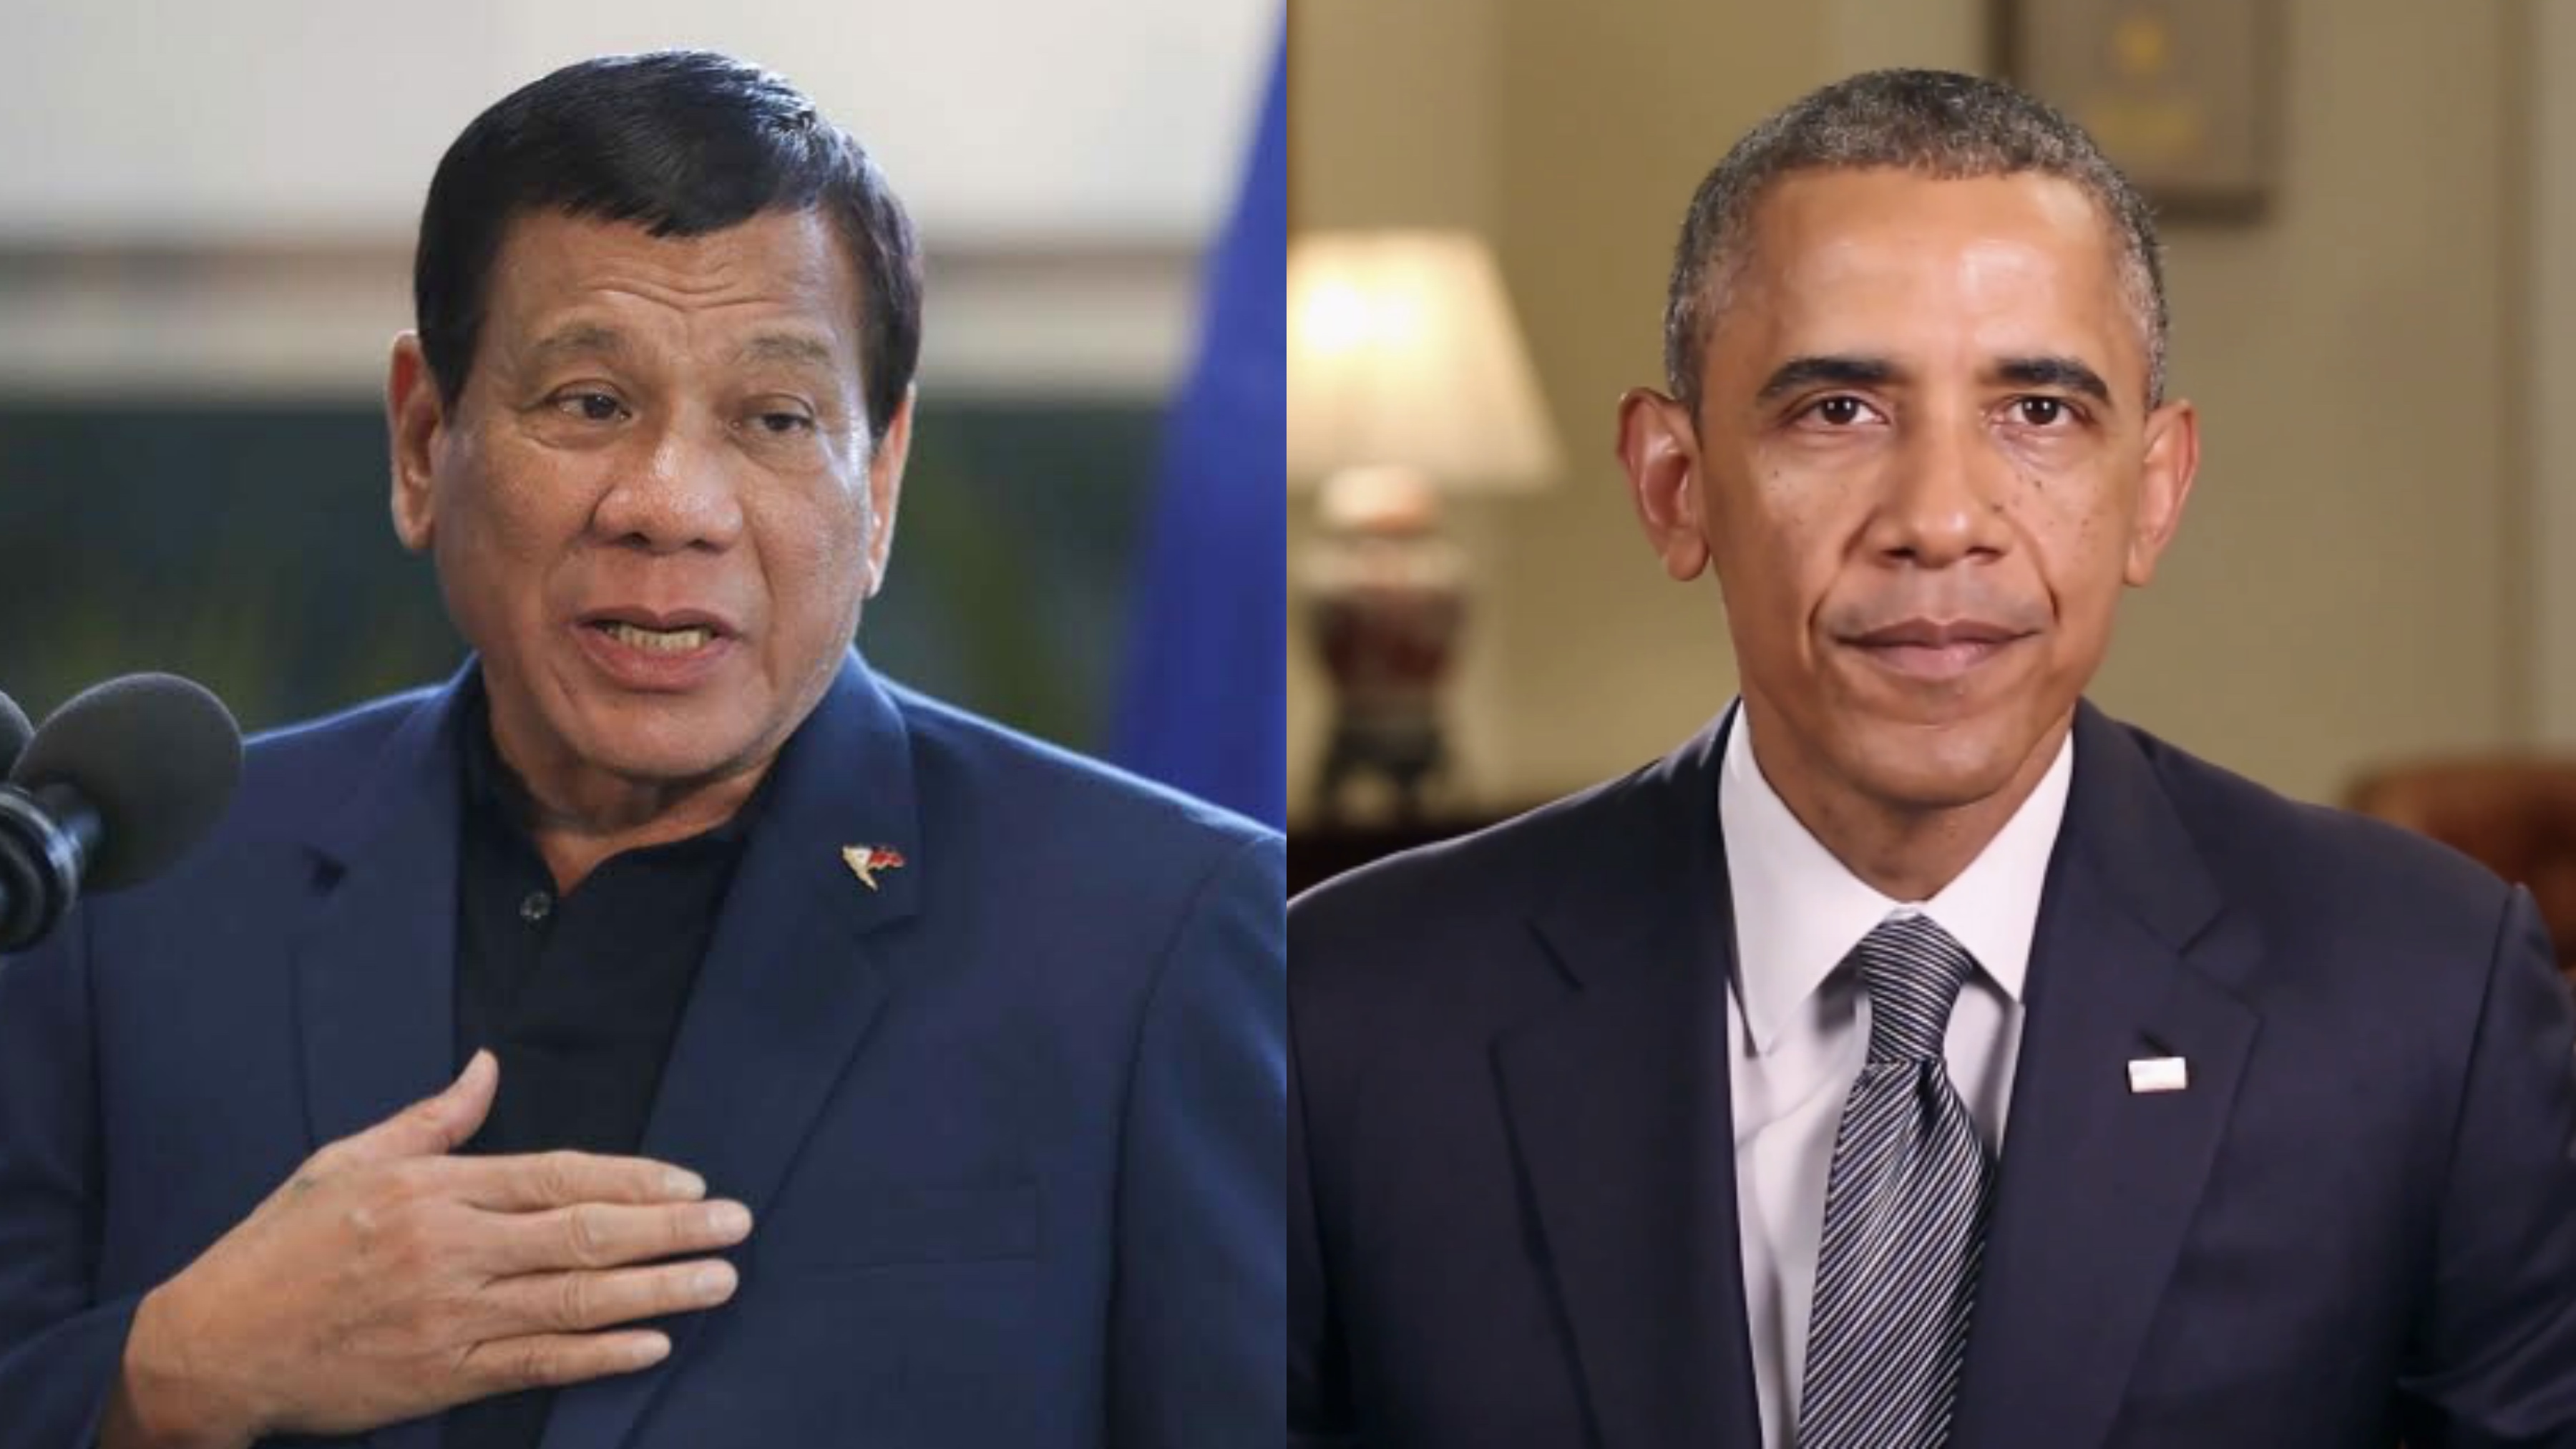 Philippine President Rodrigo Duterte (ABS-CBN News File Photo) and former US President Barack Obama (Facebook/Barack Obama)